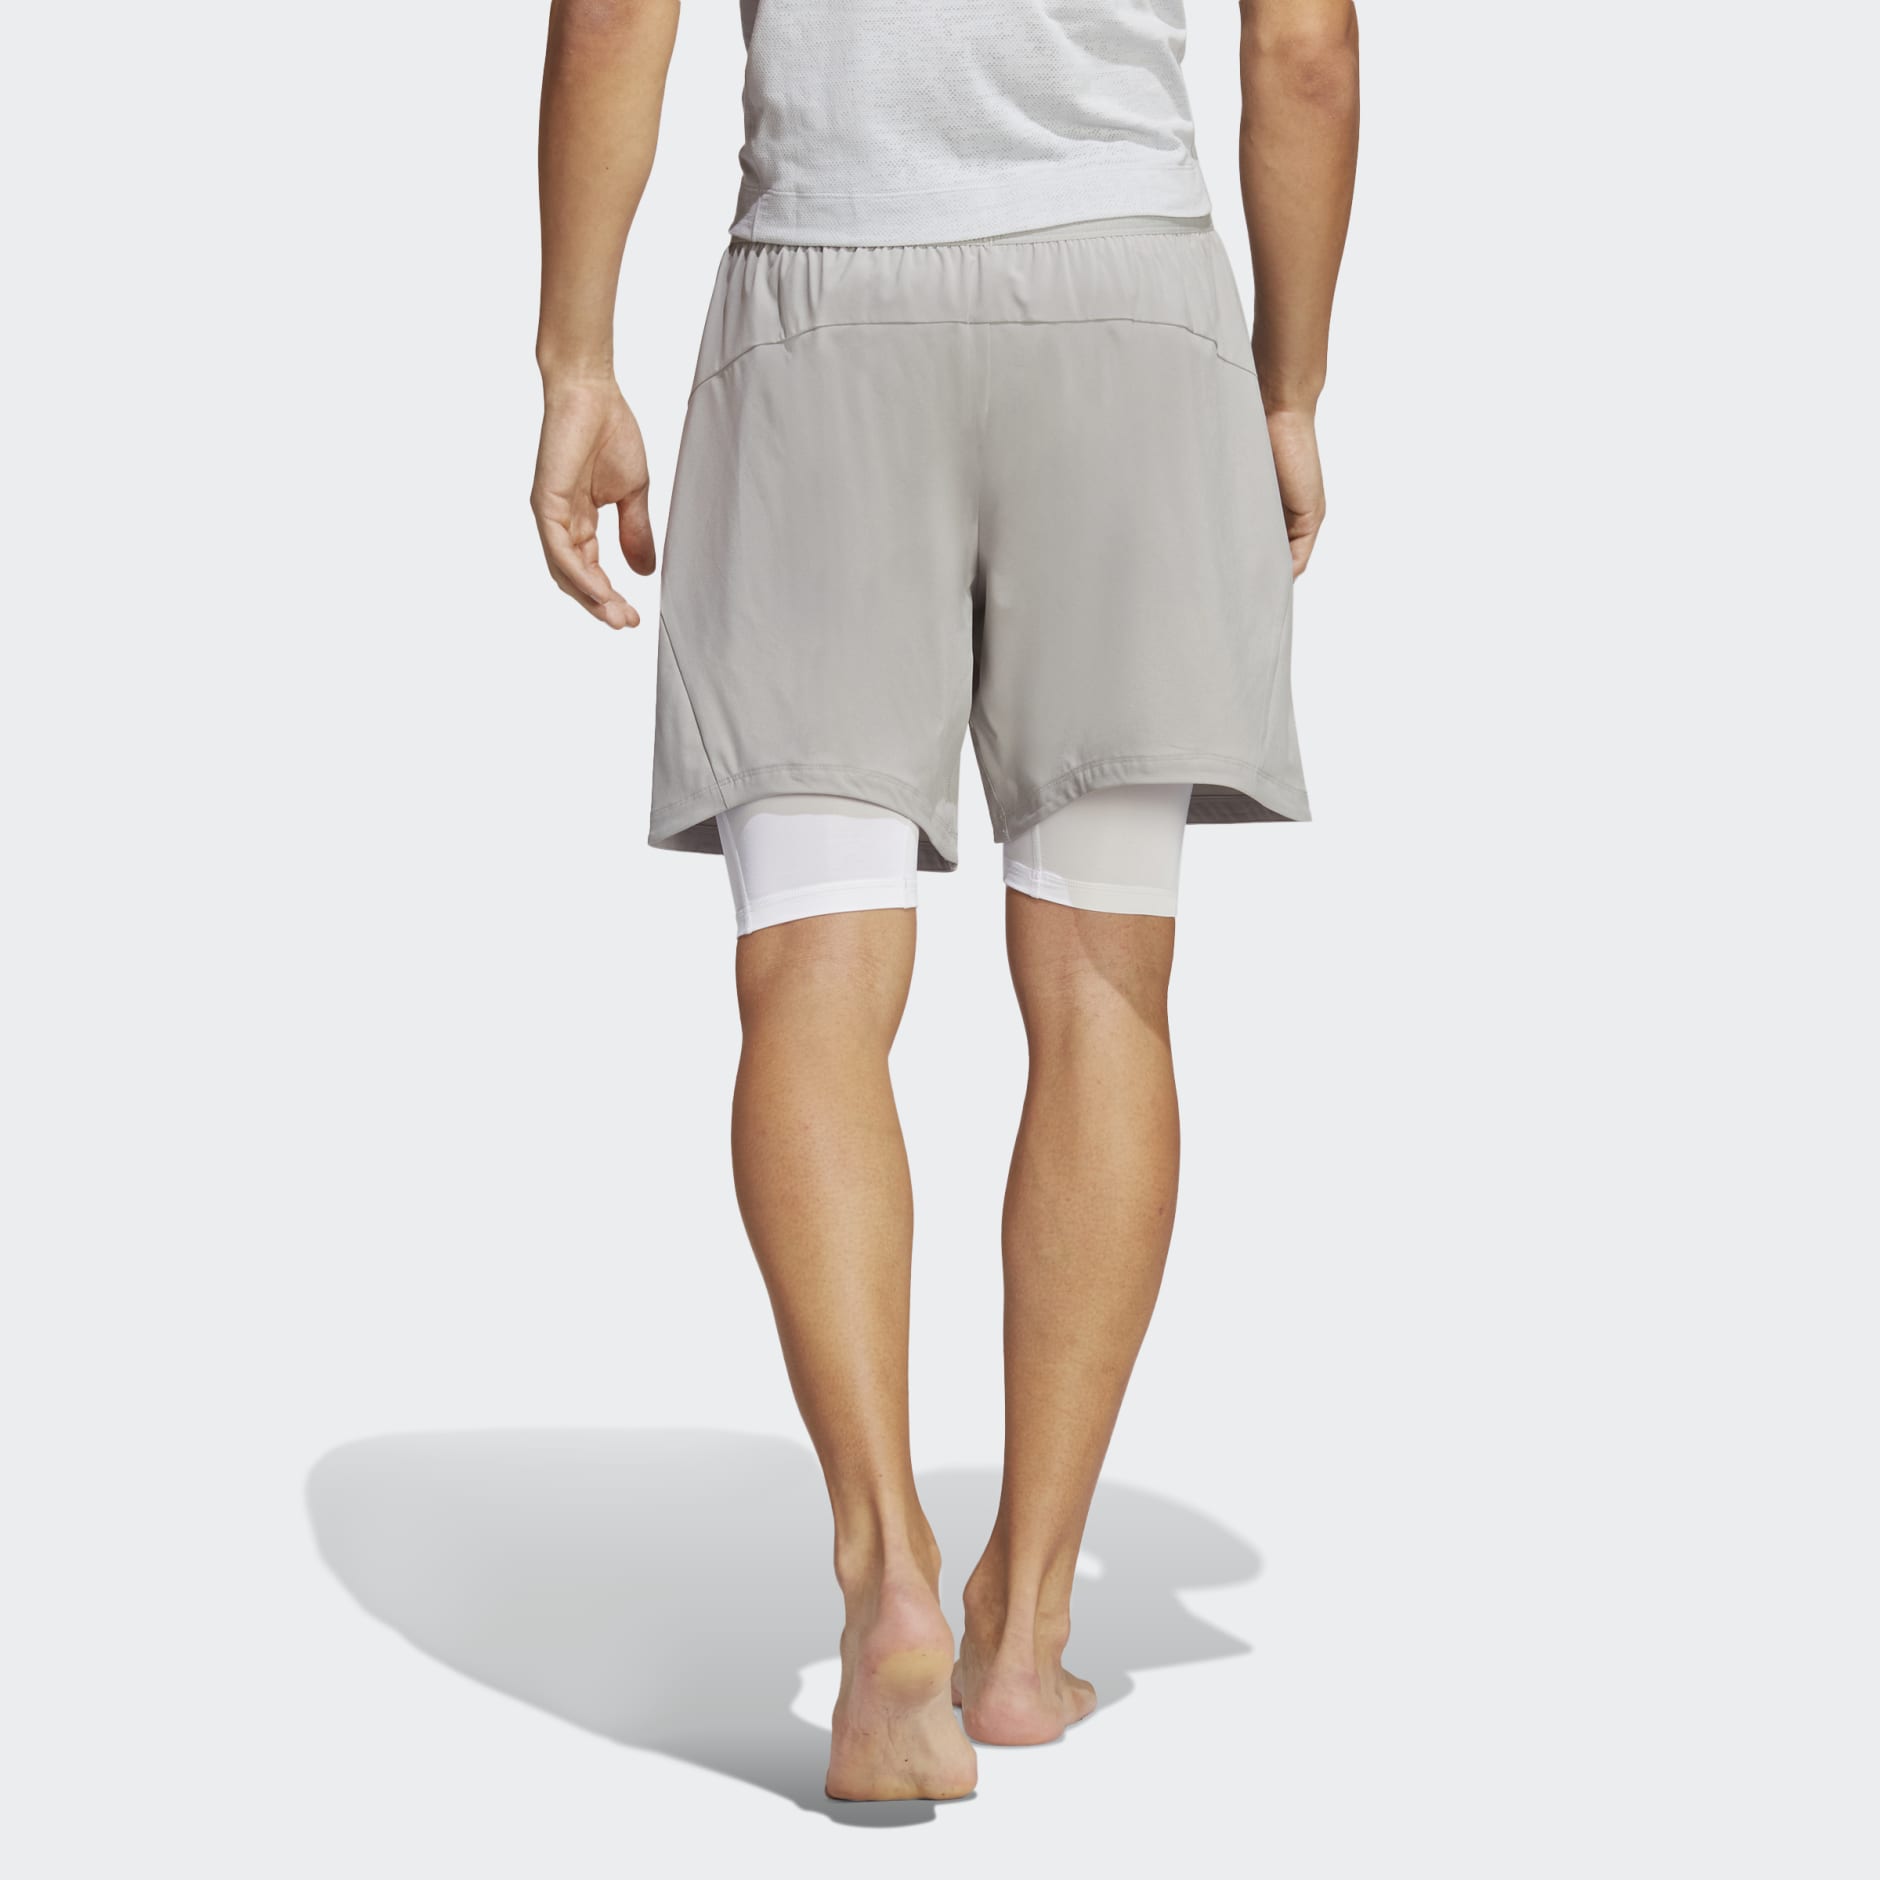 plaag Deuk Bewusteloos Men's Clothing - Yoga Training 2-in-1 Shorts - Grey | adidas Oman